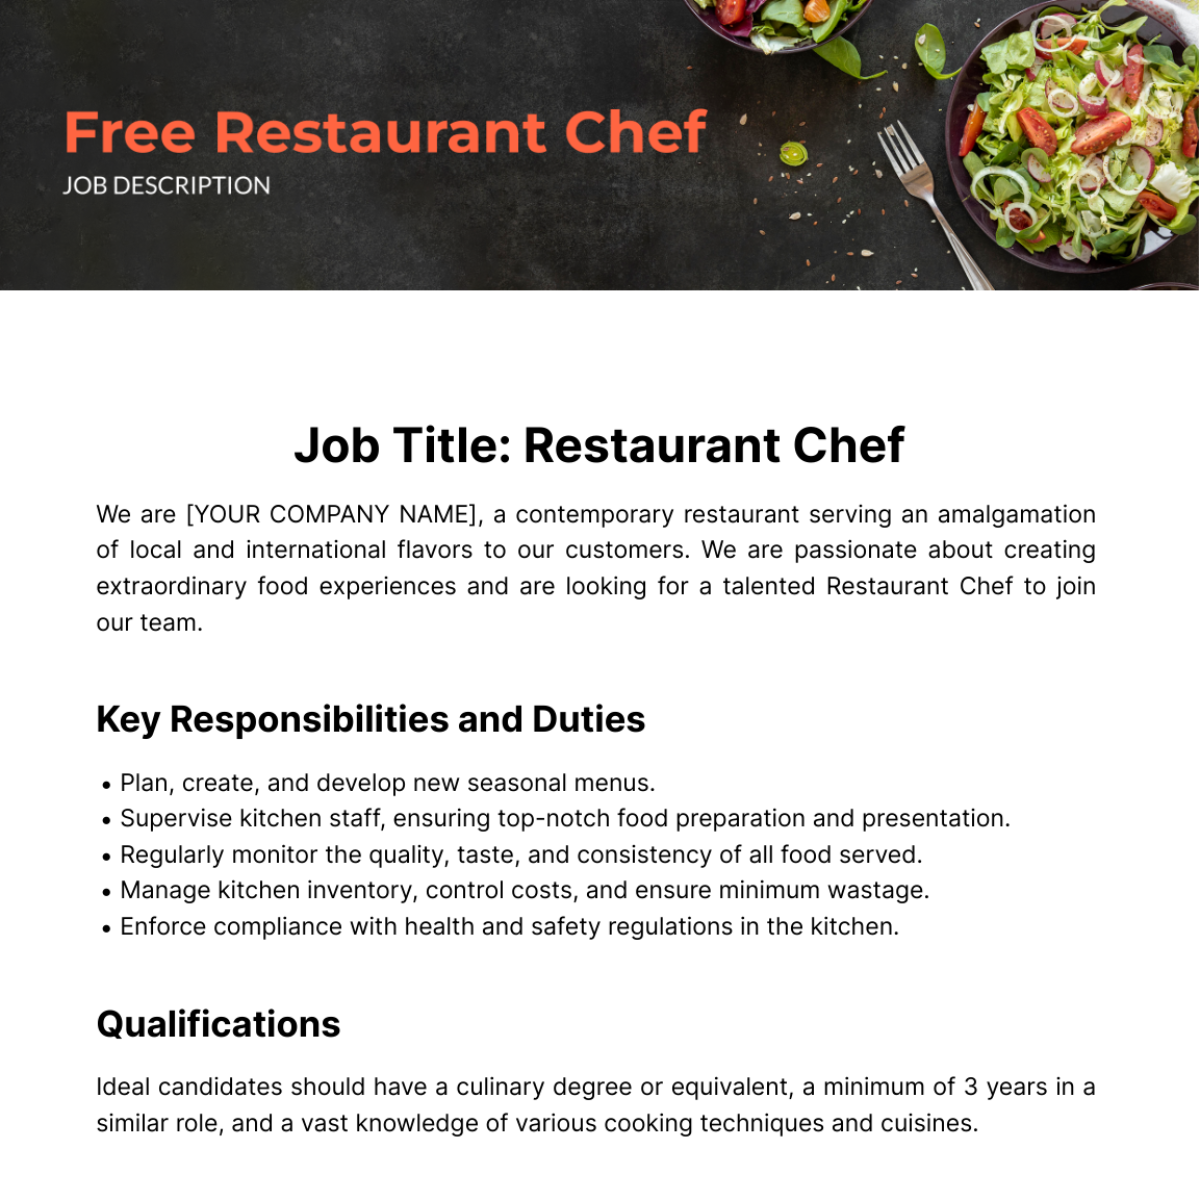 Restaurant Chef Job Description Template